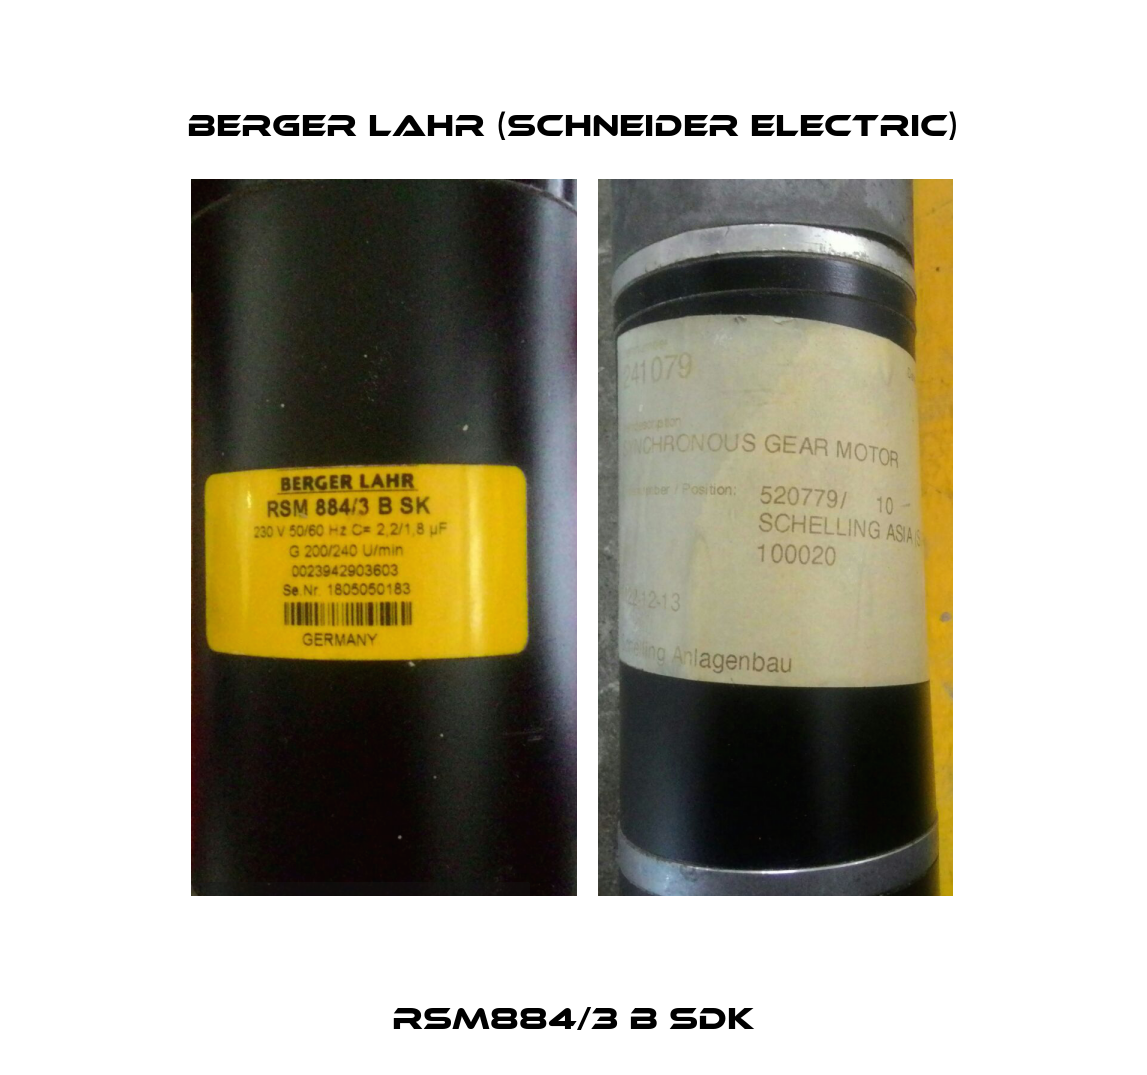 RSM884/3 B SDK Berger Lahr (Schneider Electric)